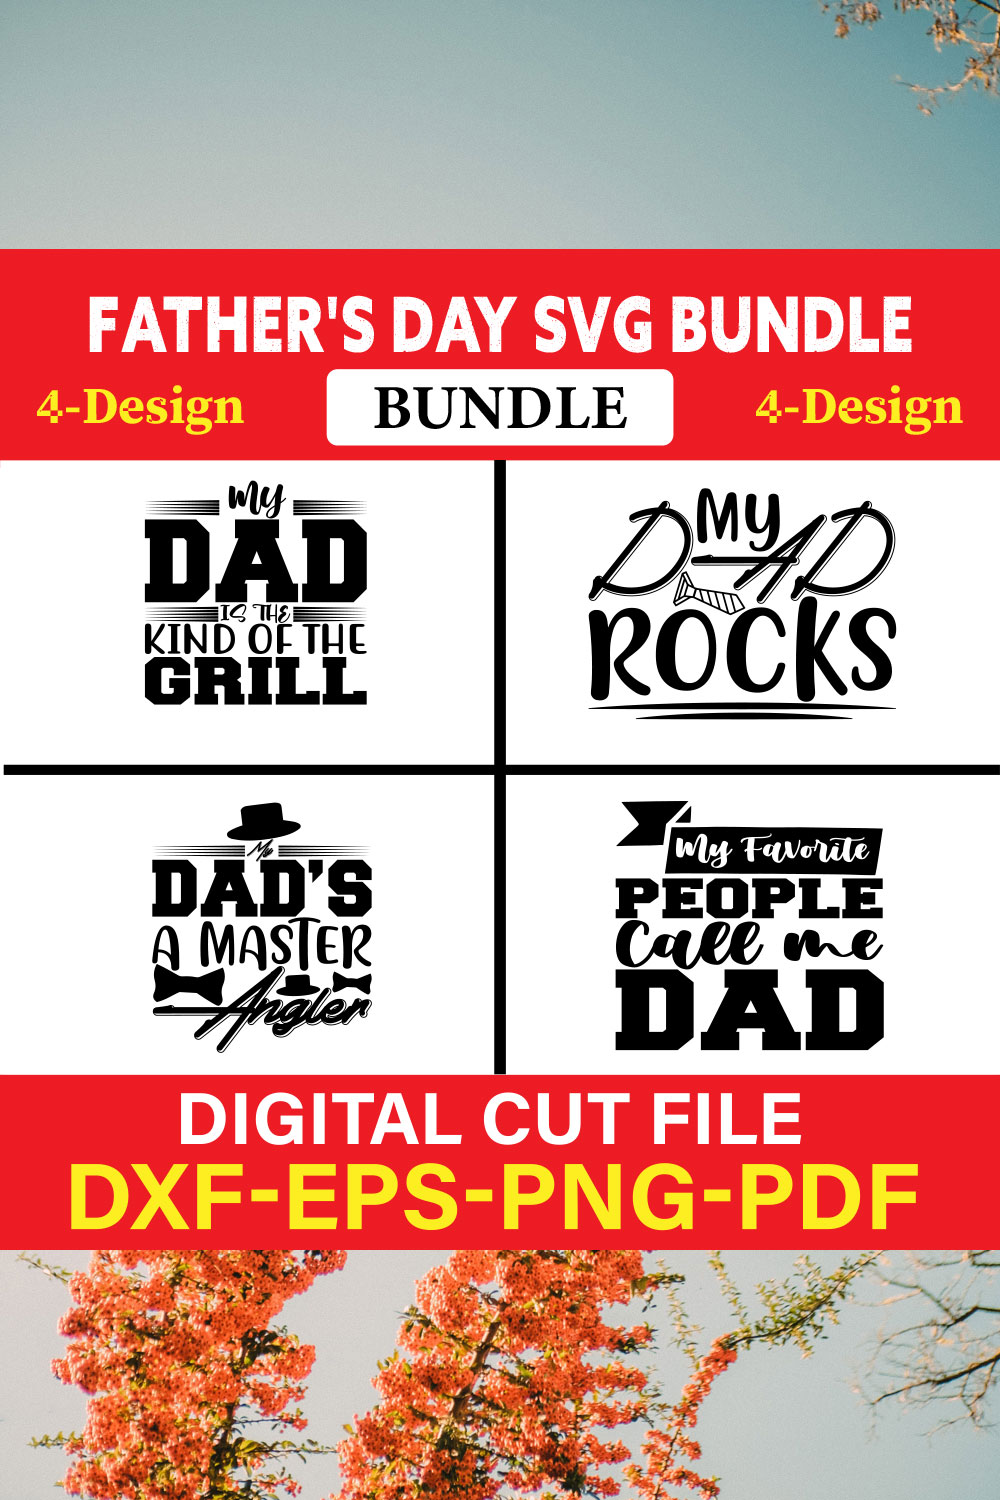 Father's Day SVG T-shirt Design Bundle Vol-4 pinterest preview image.